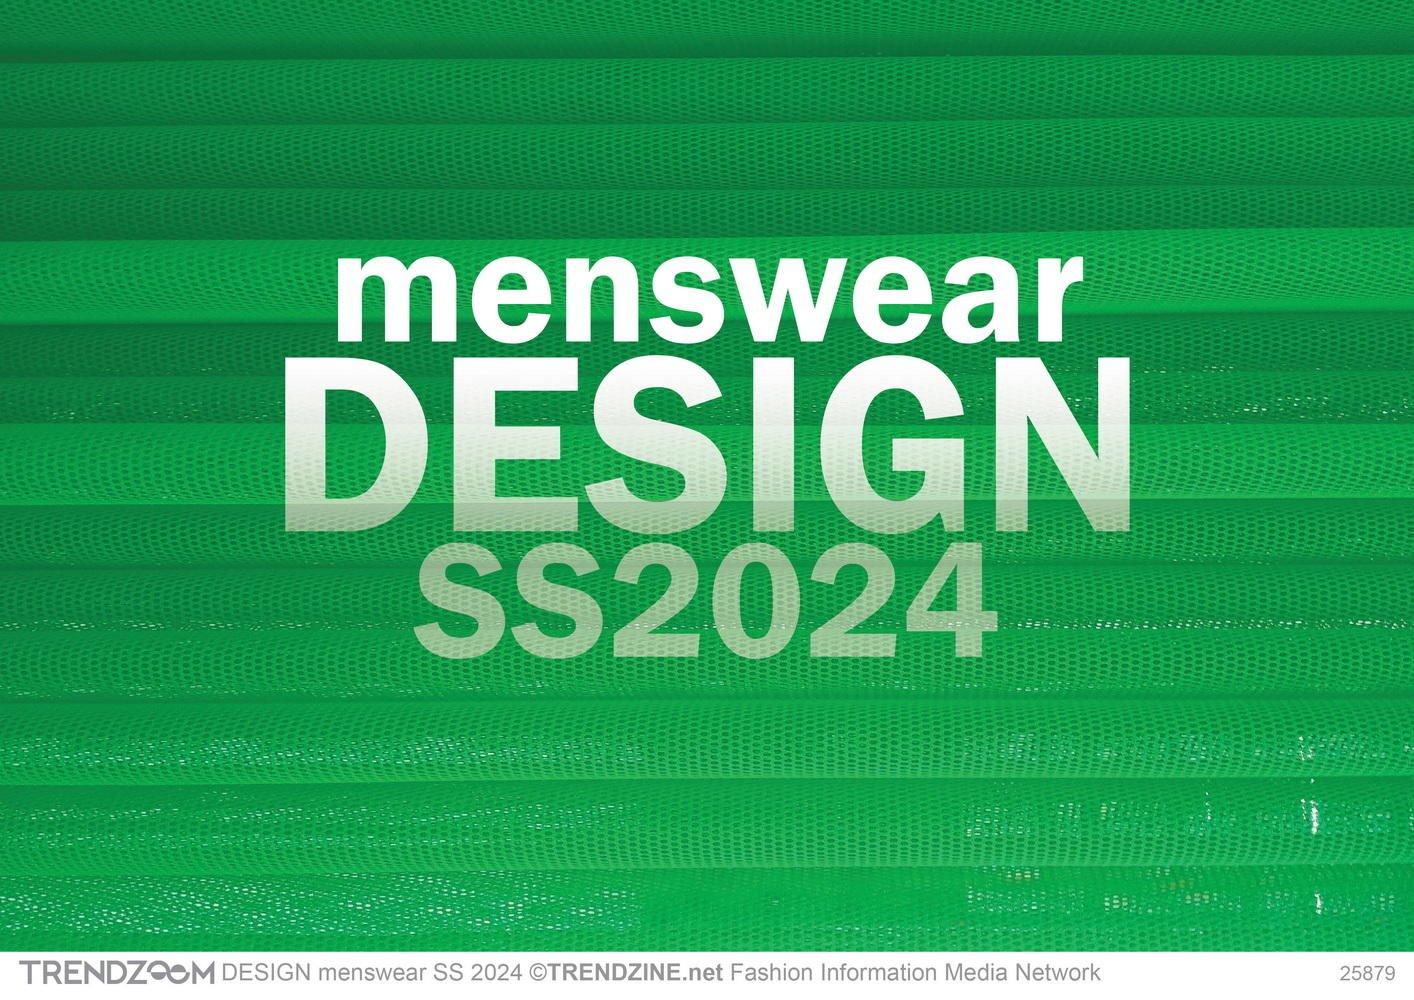 TRENDZOOM Design SS 2024 Menswear